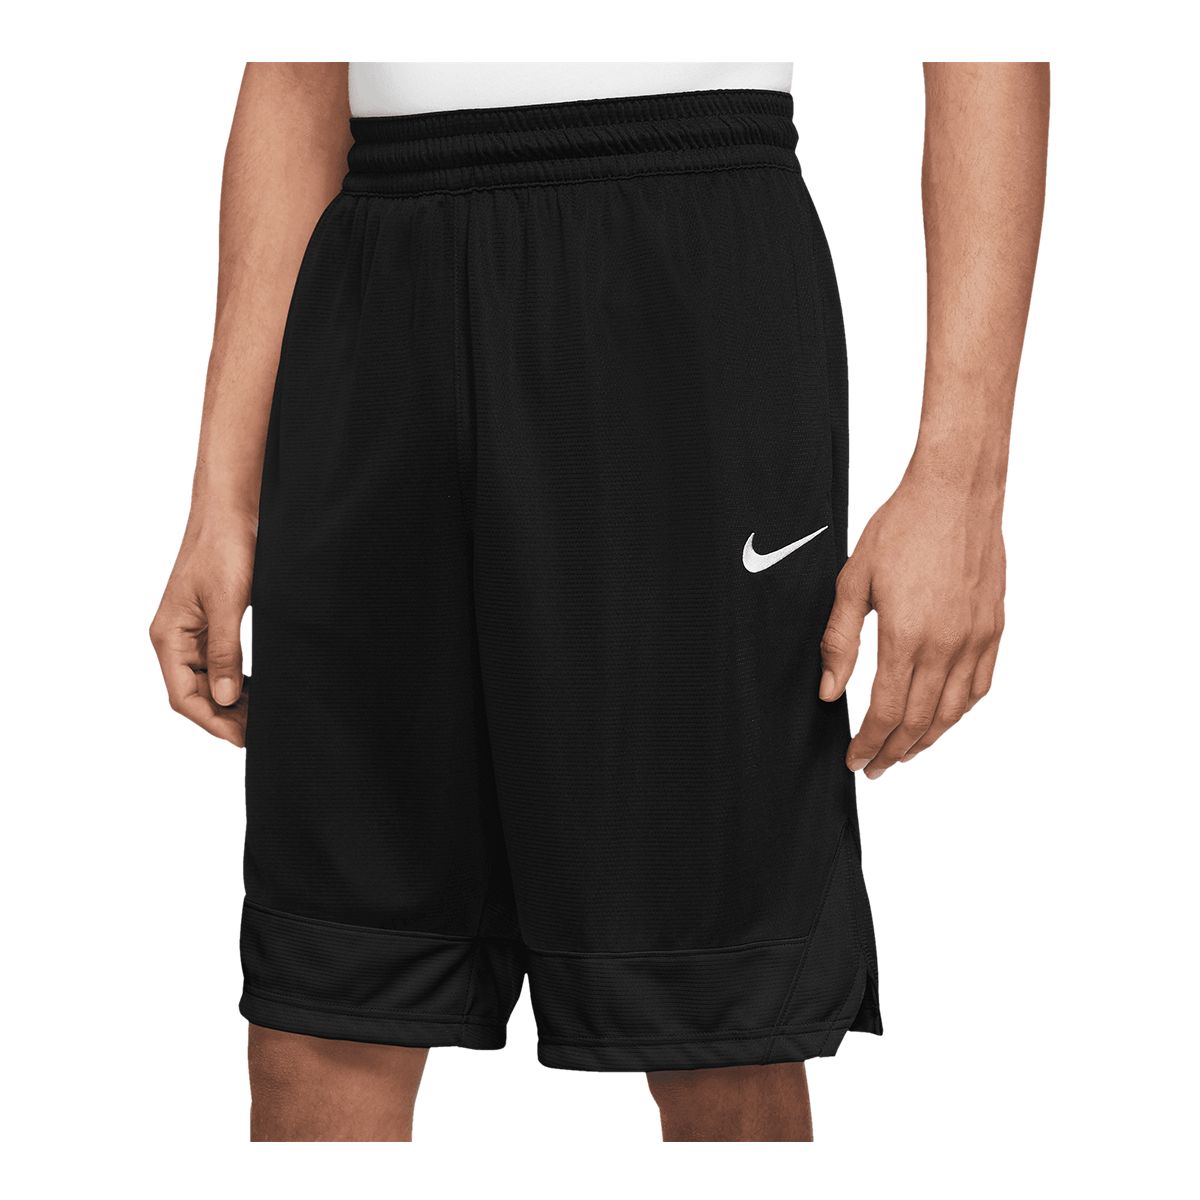 Official Toronto Raptors Nike Shorts, Basketball Shorts, Gym Shorts, Compression  Shorts